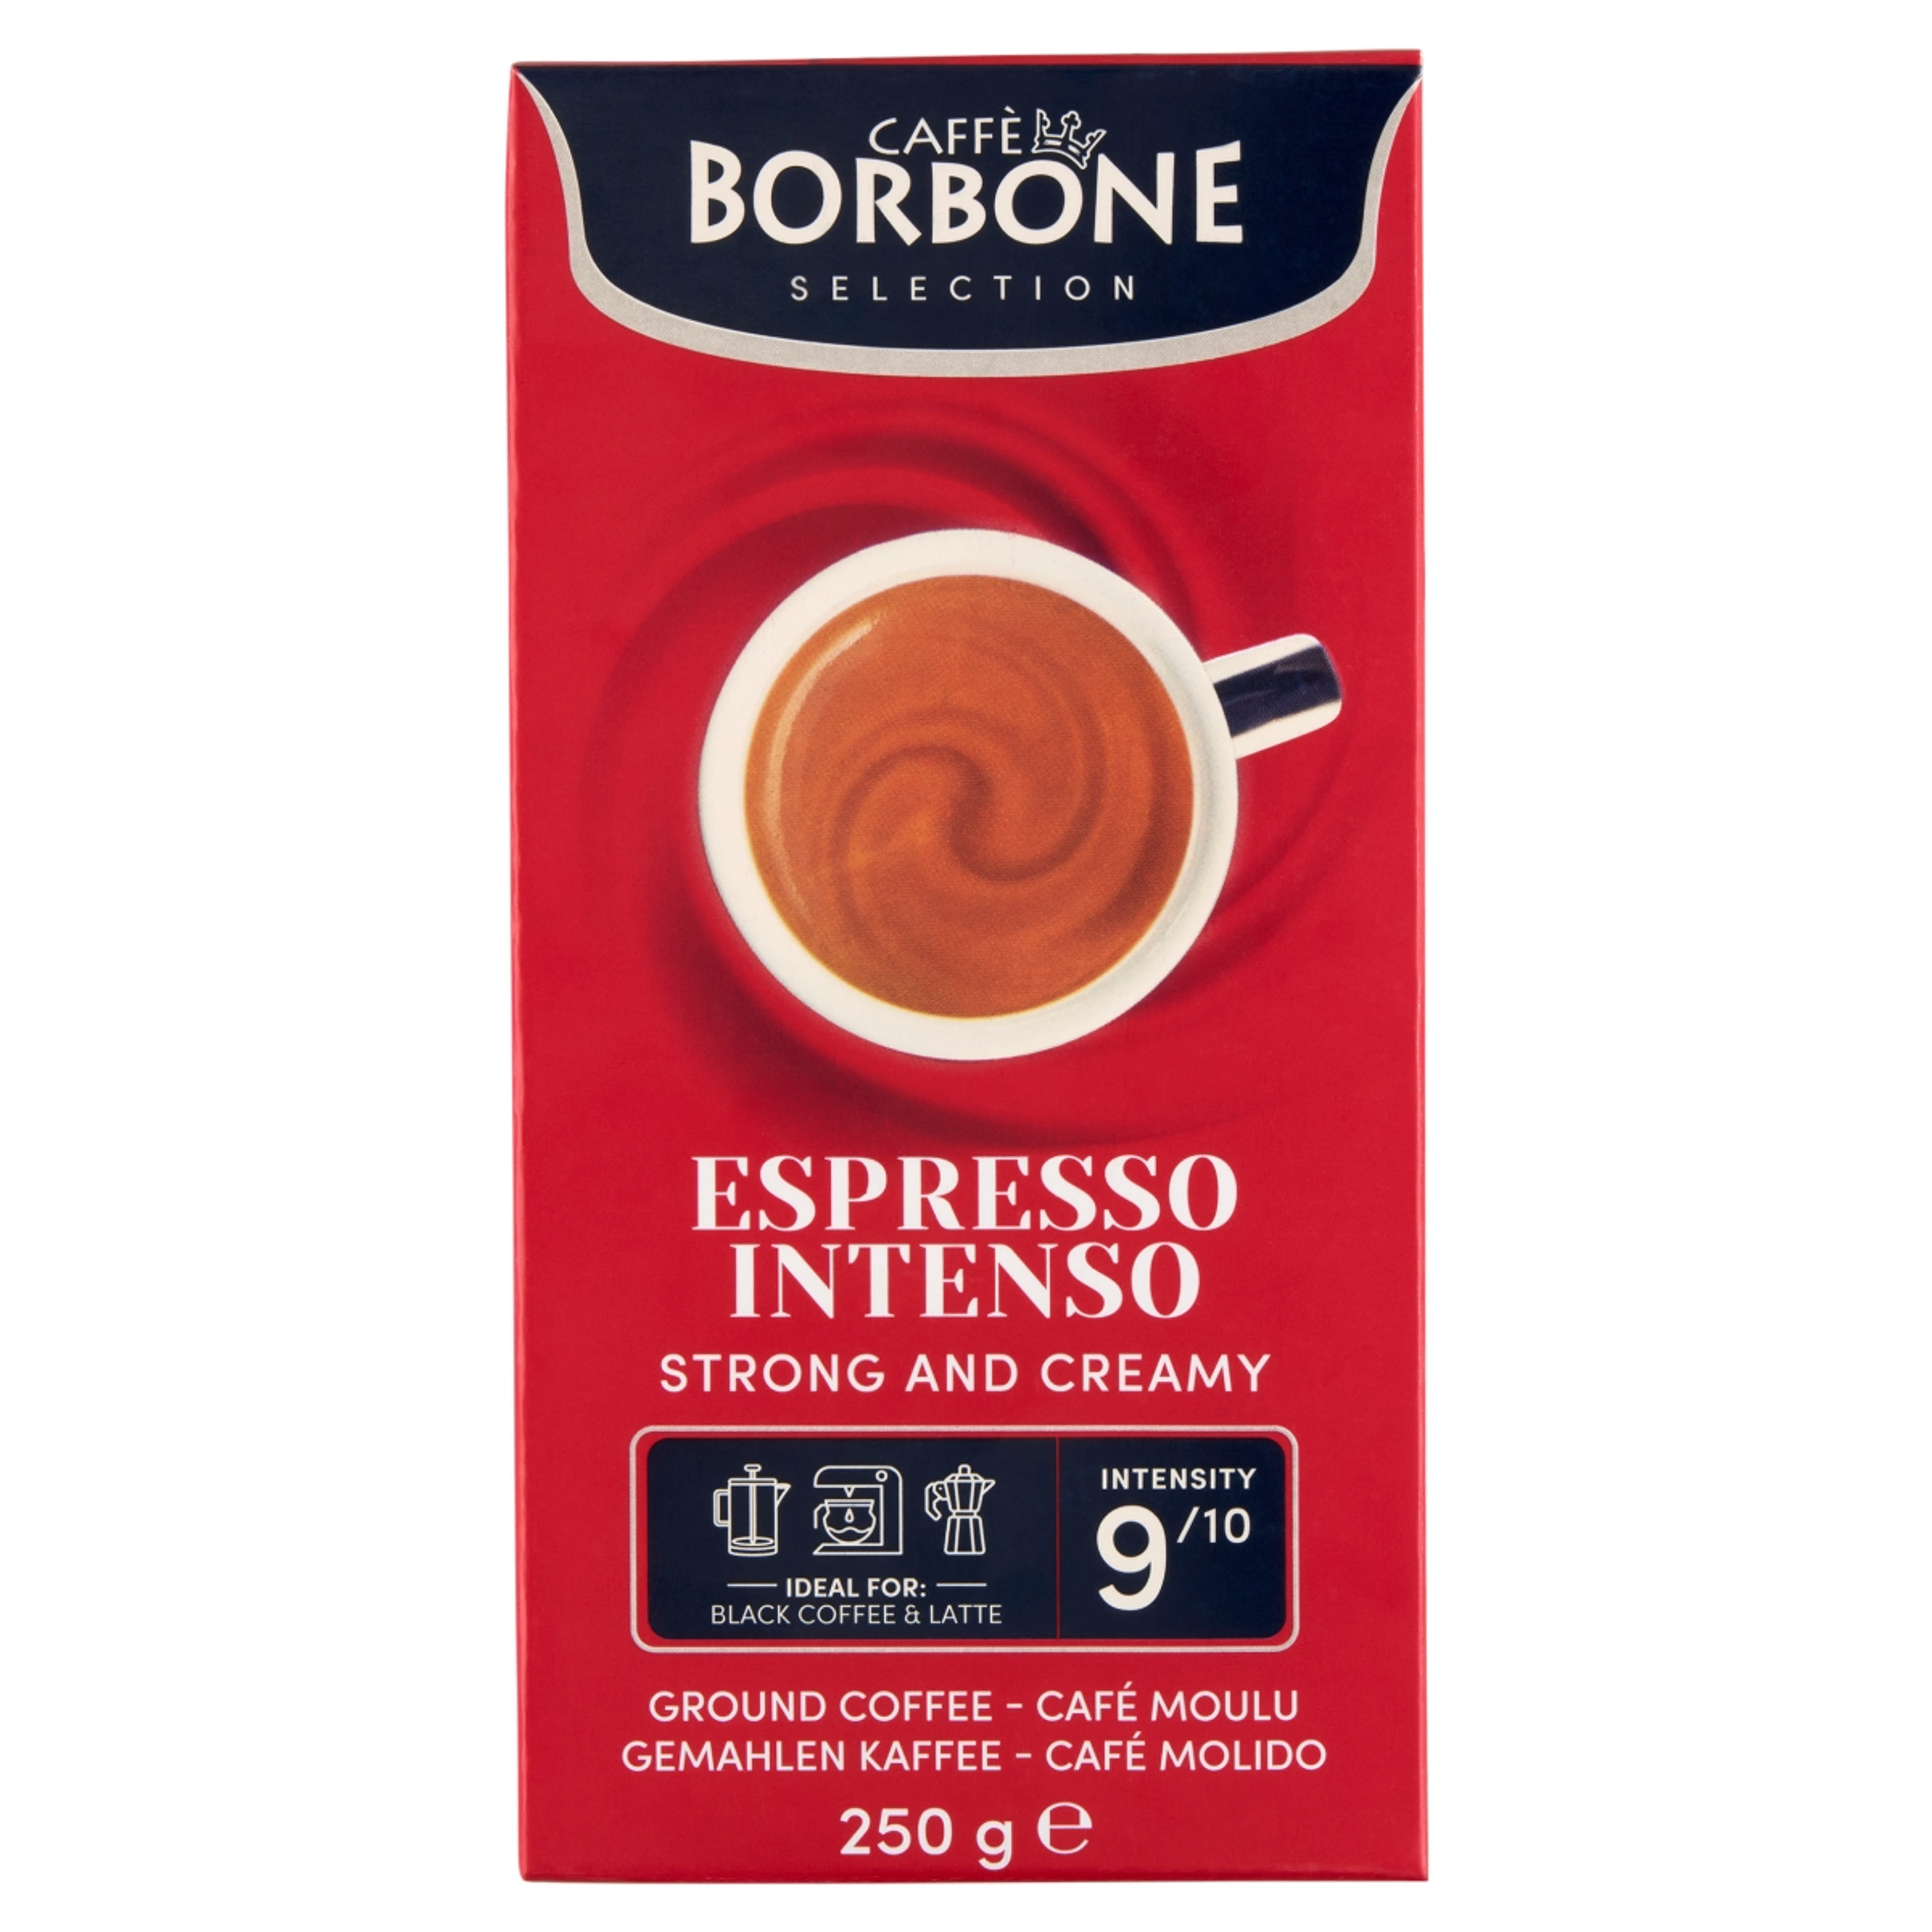 Caffè Borbone Espresso Intenso őrölt kávé - 250 g